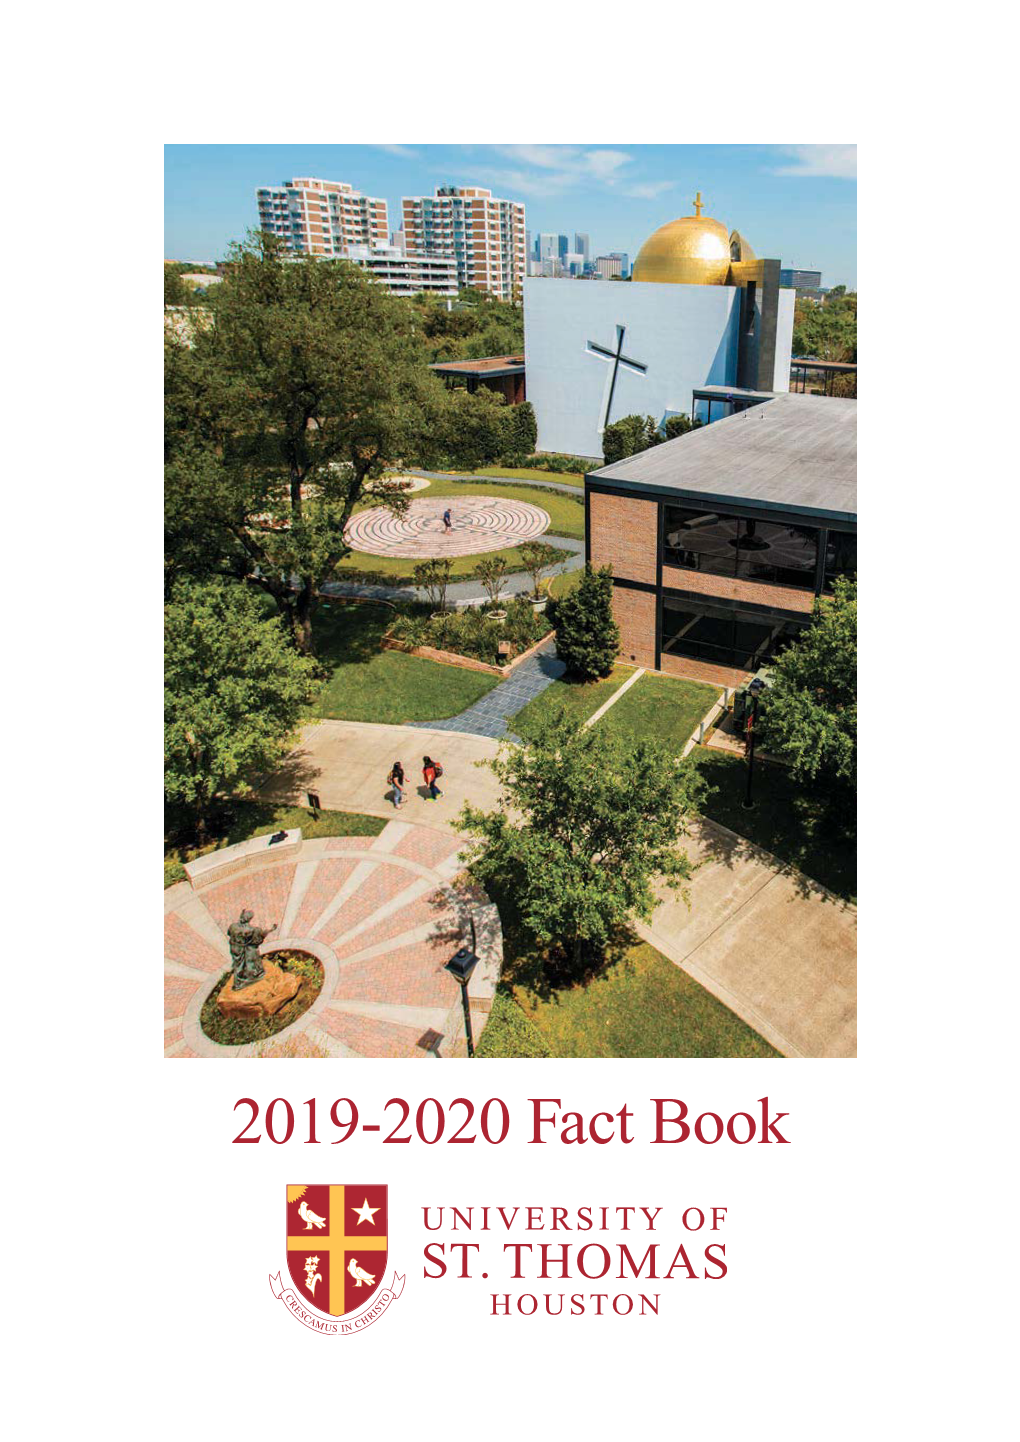 2019-2020 Fact Book University of St